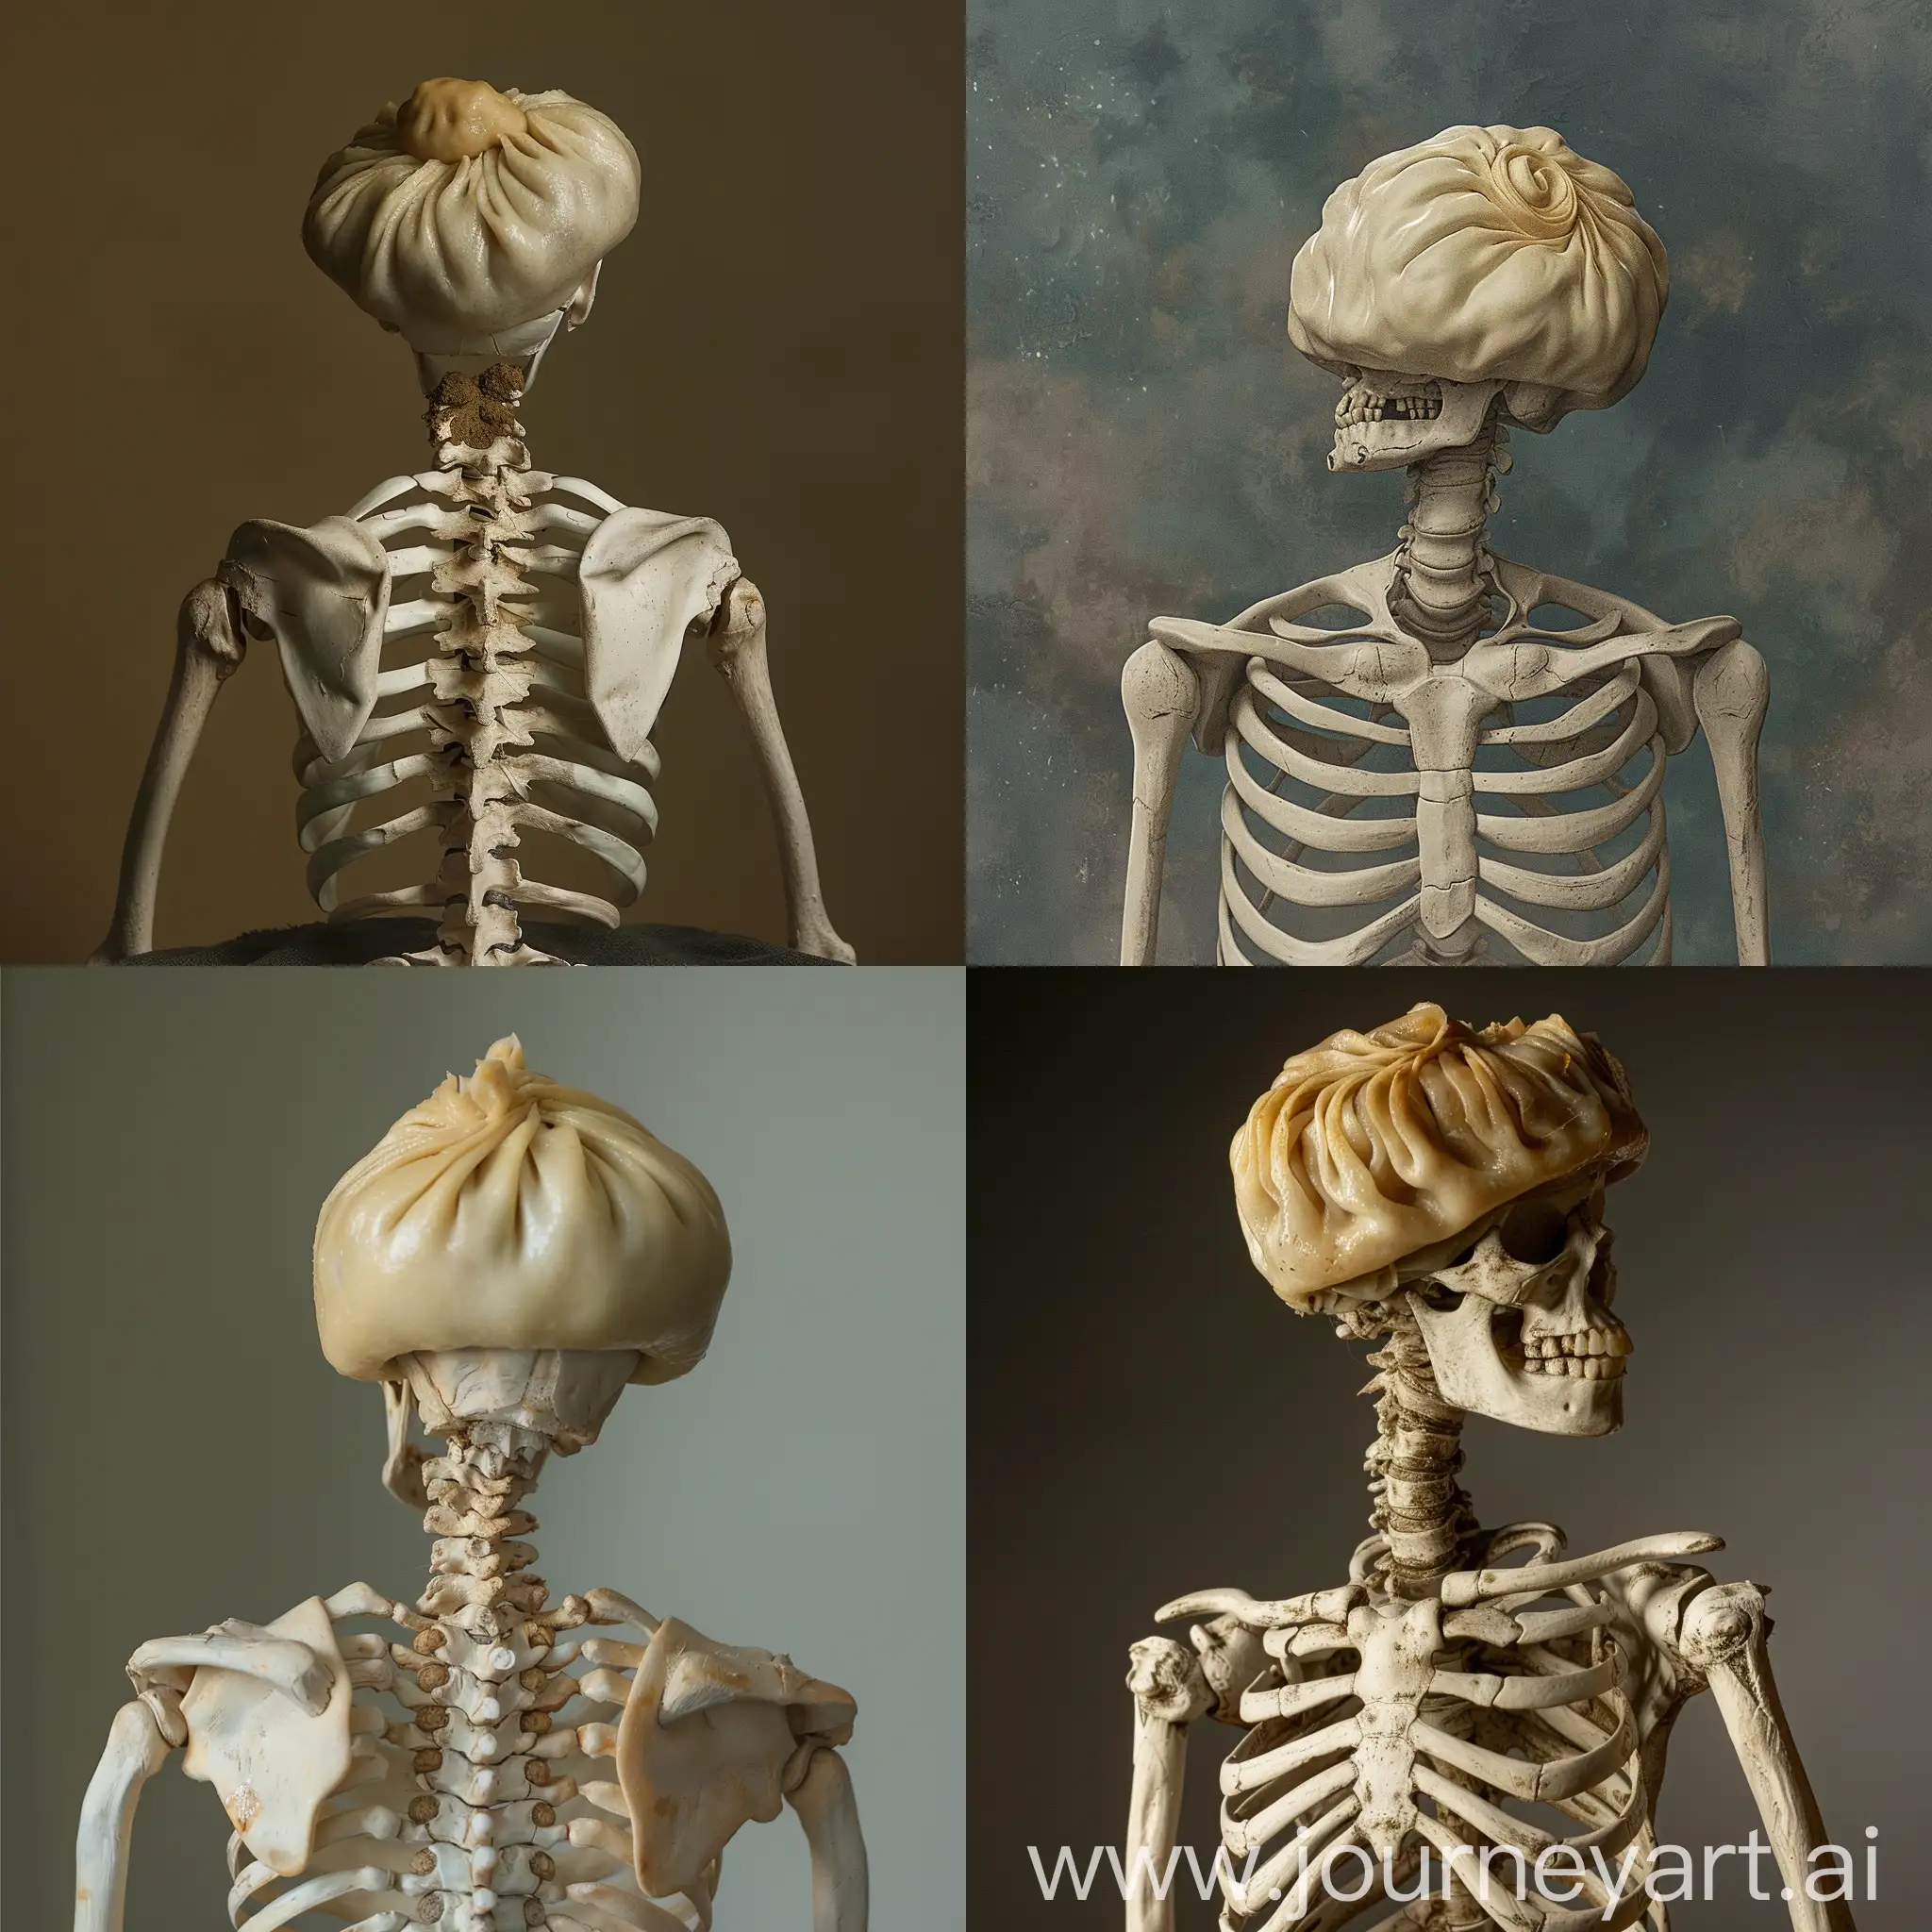 a skeleton, but instead of a head he has a dumpling